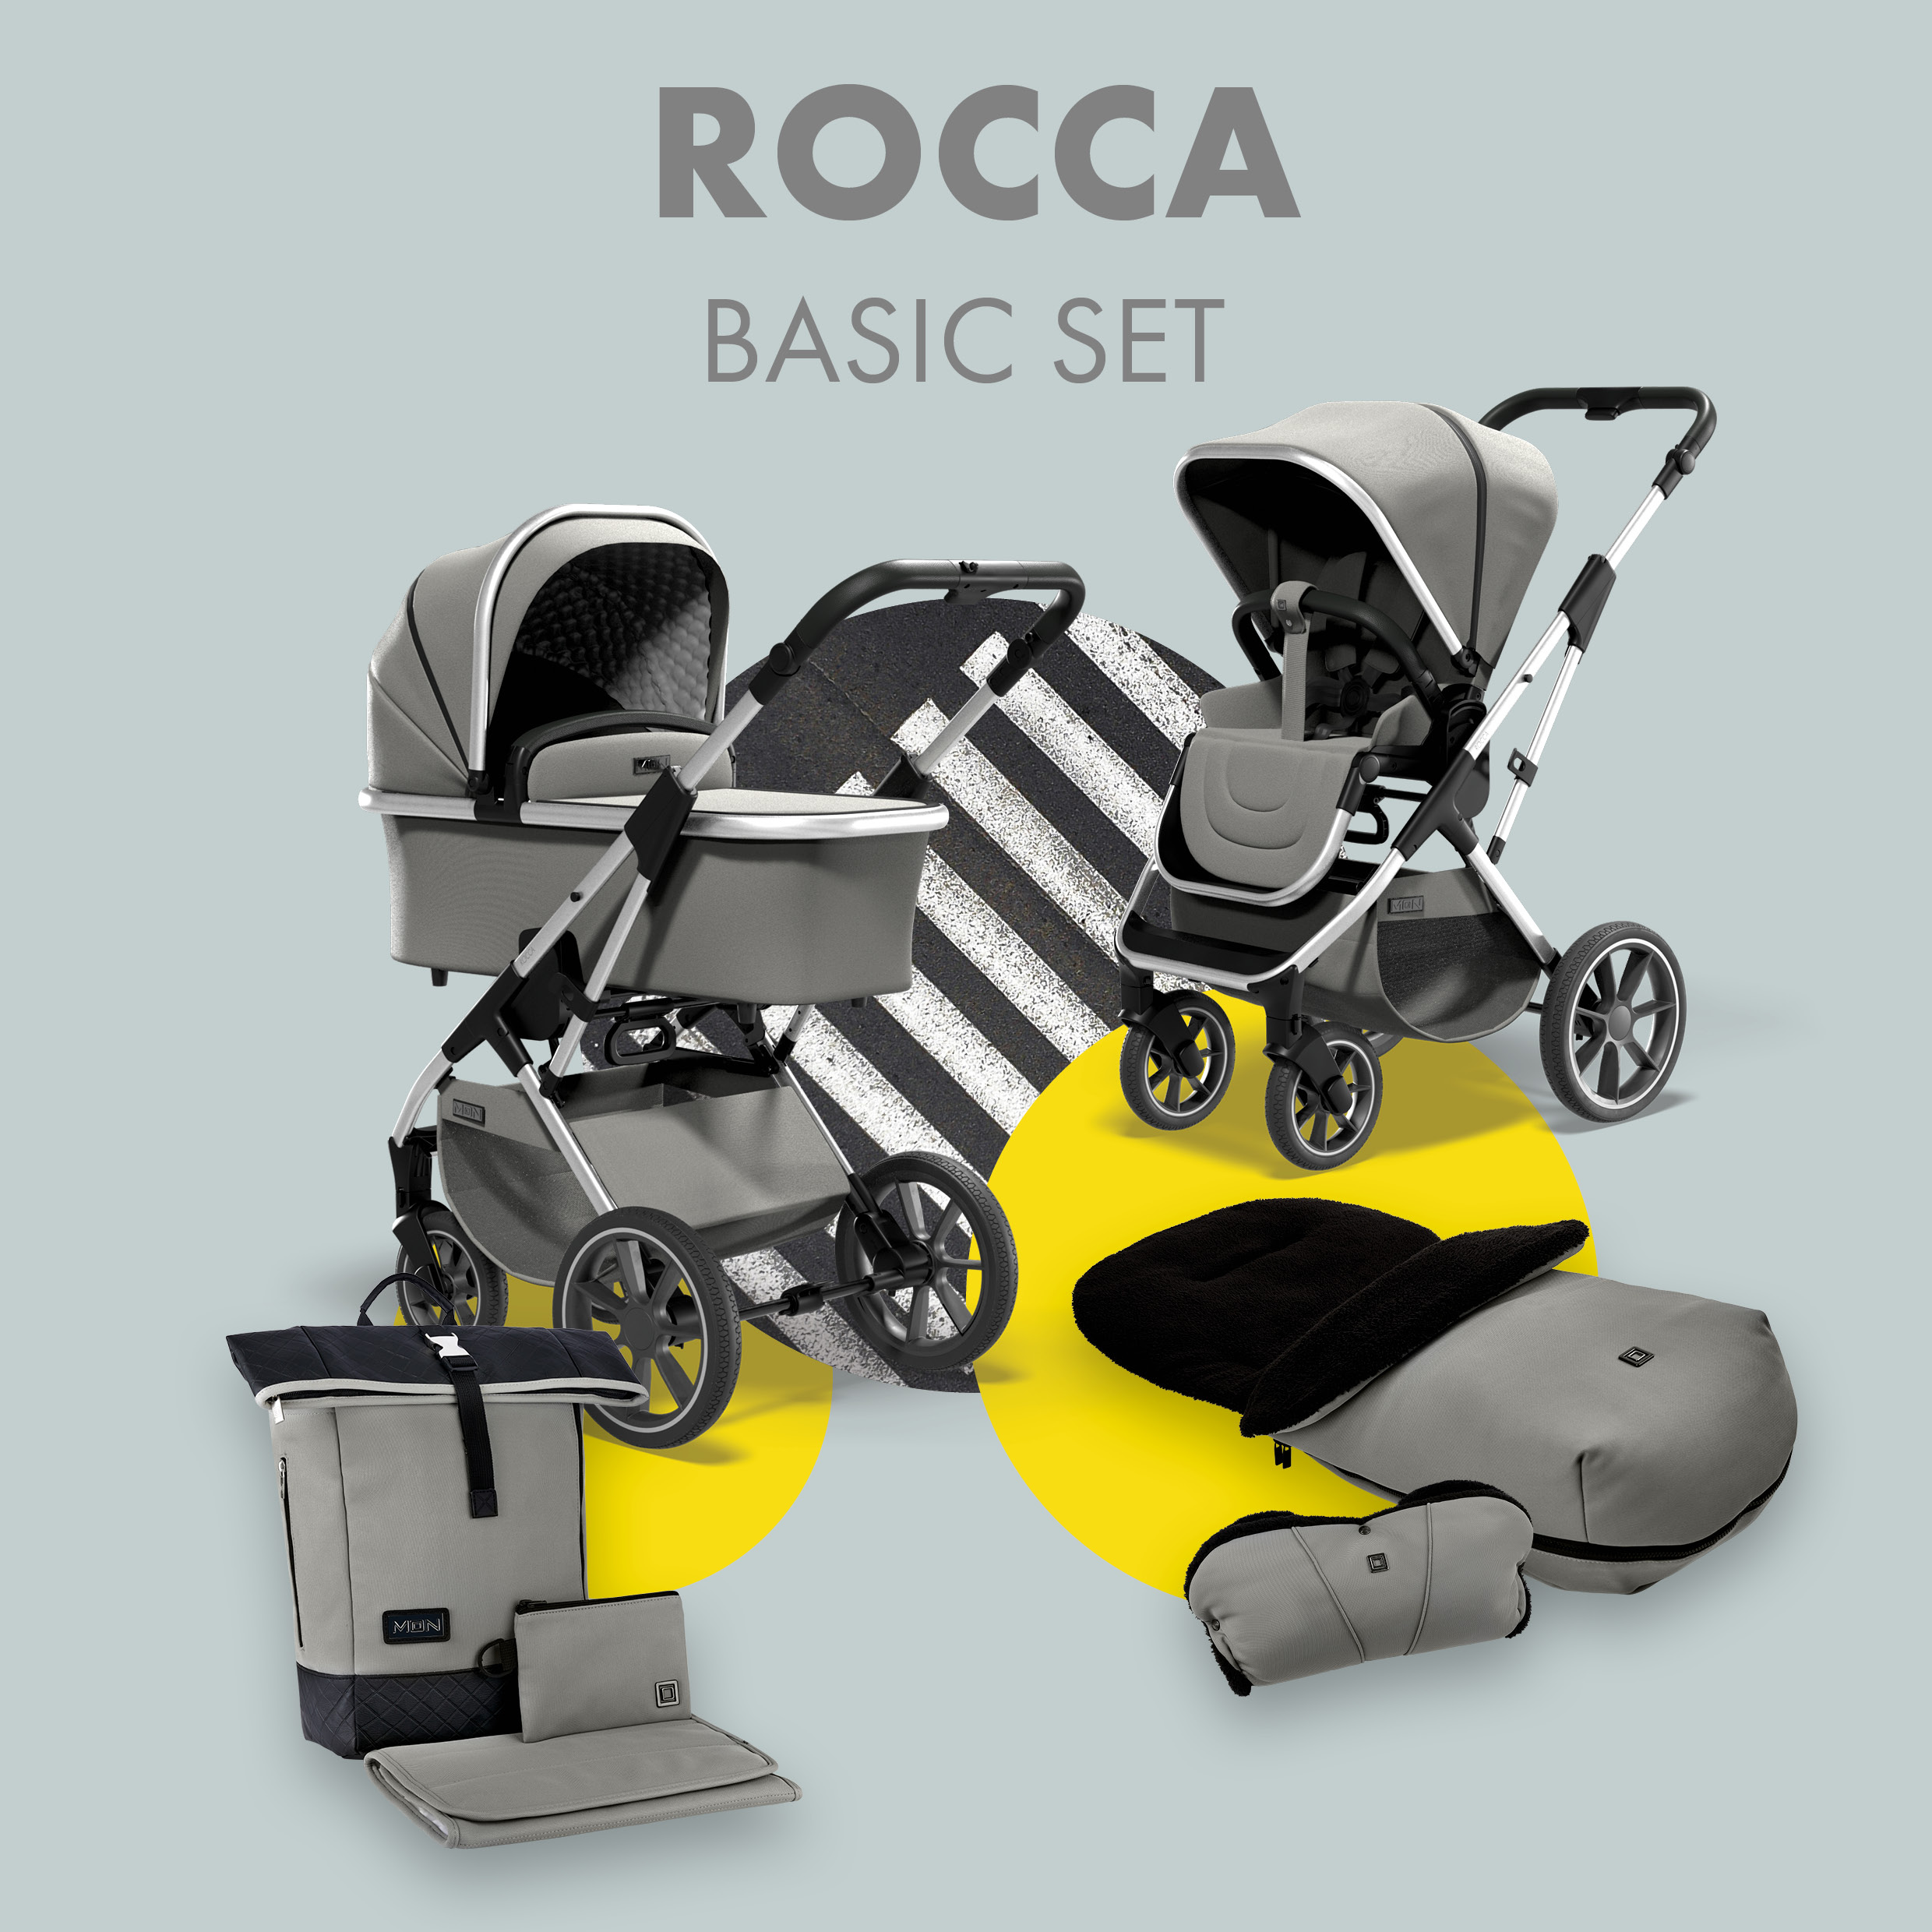 ROCCA BASIC SET